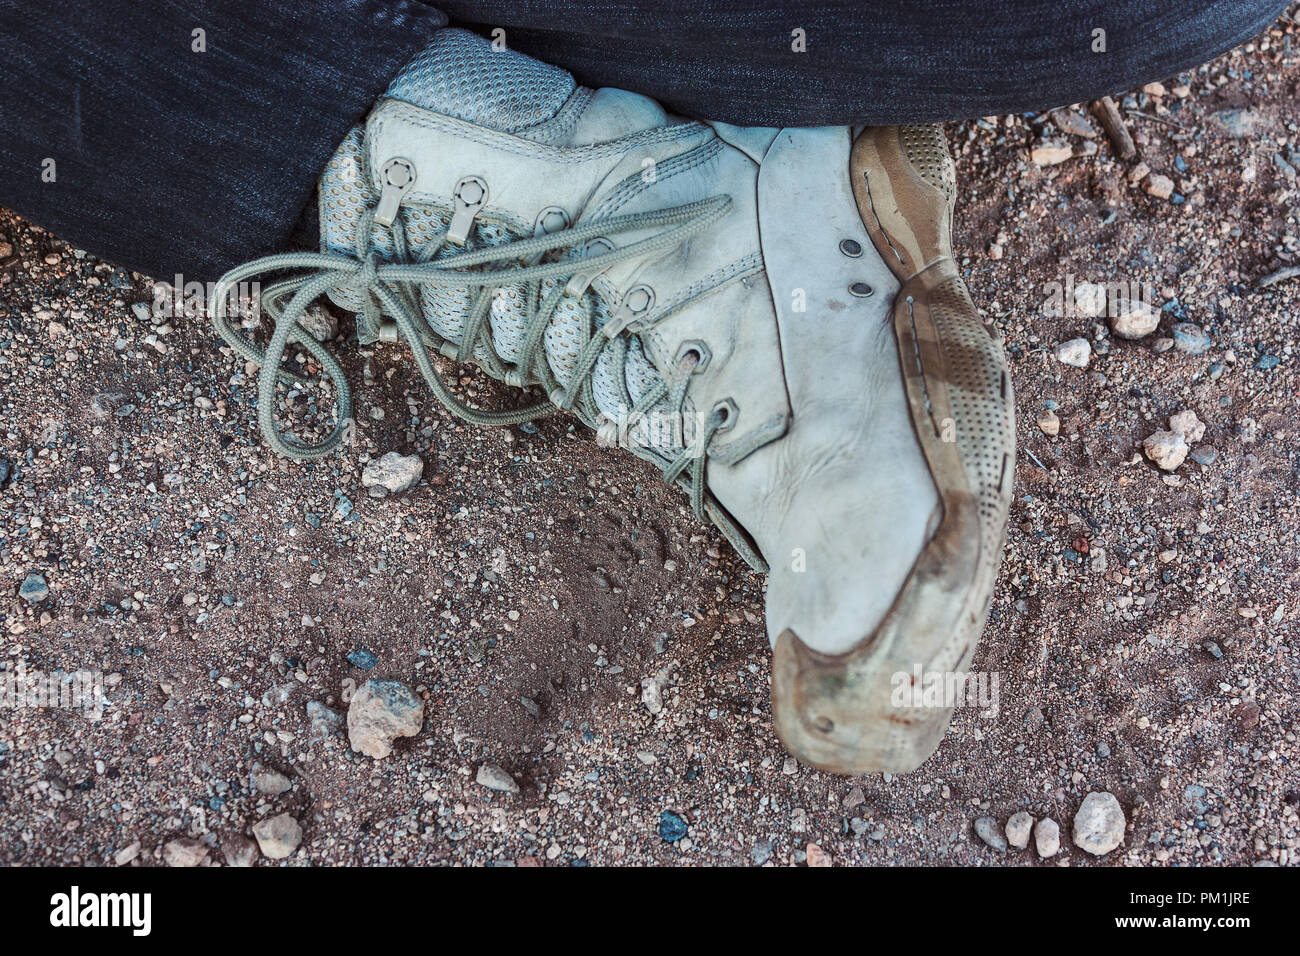 Schmutzige Stiefel reisen Outback Australien Stockfoto